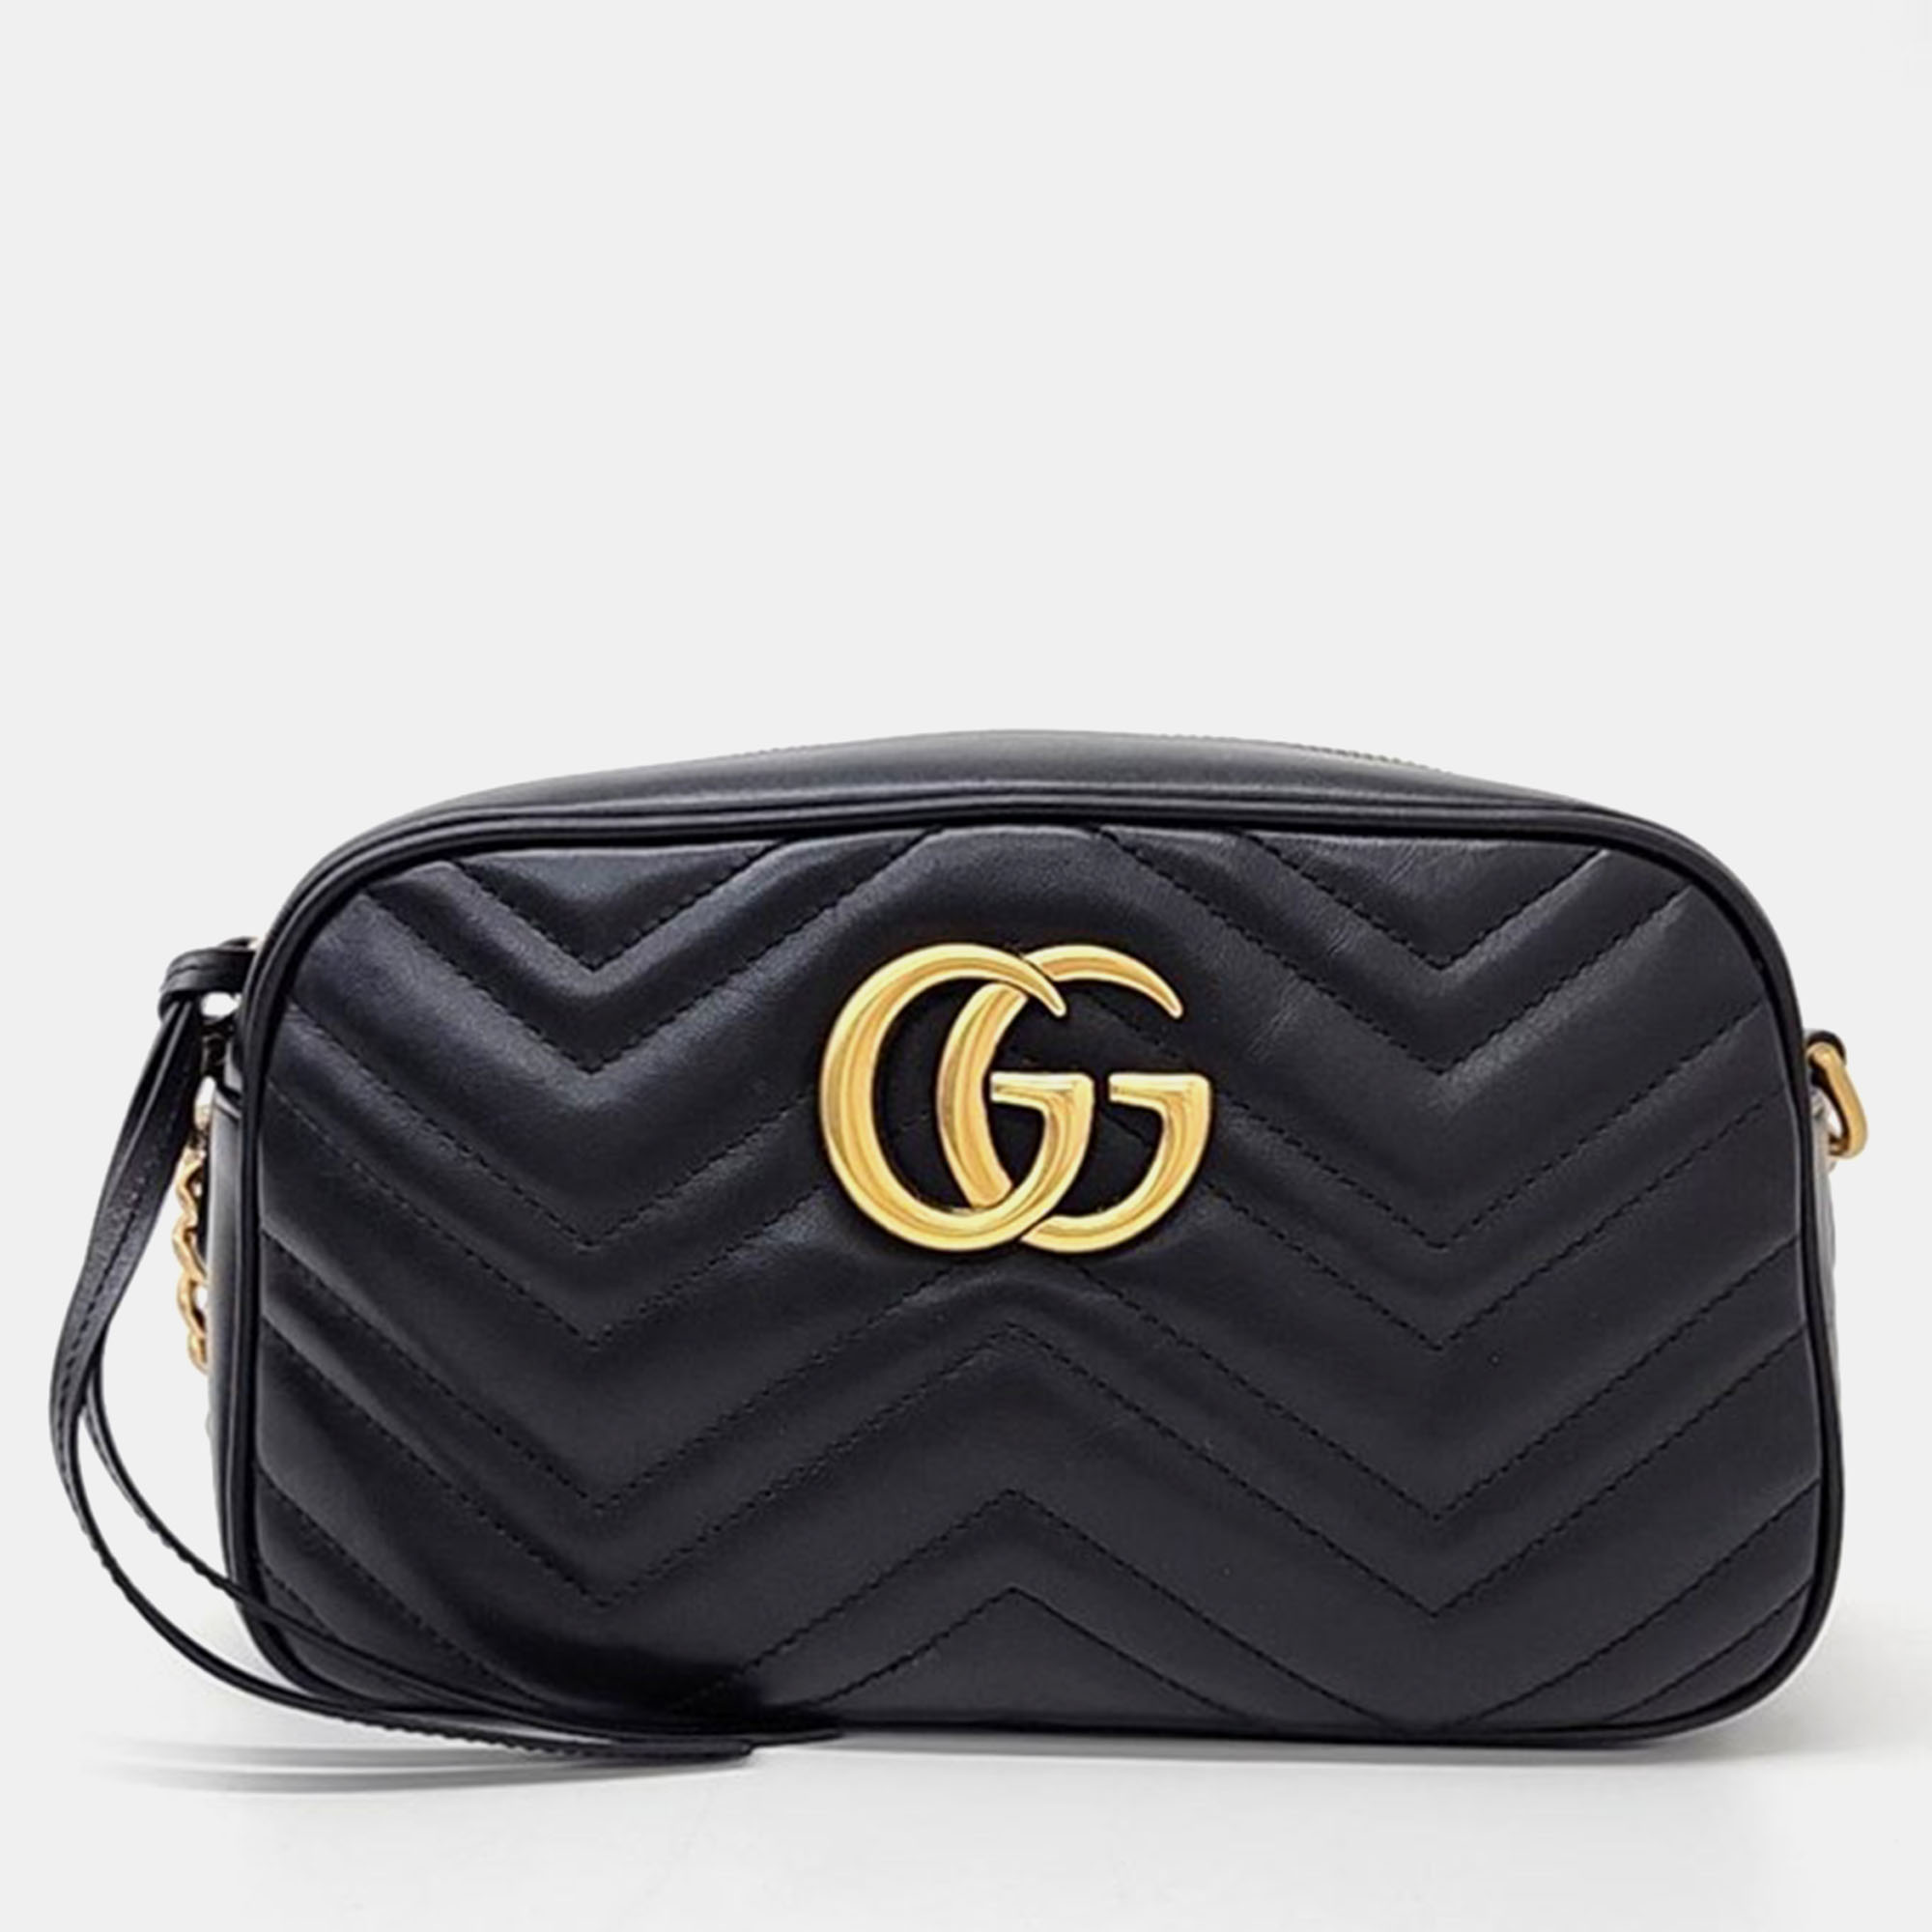 Gucci black leather gg marmont crossbody bag